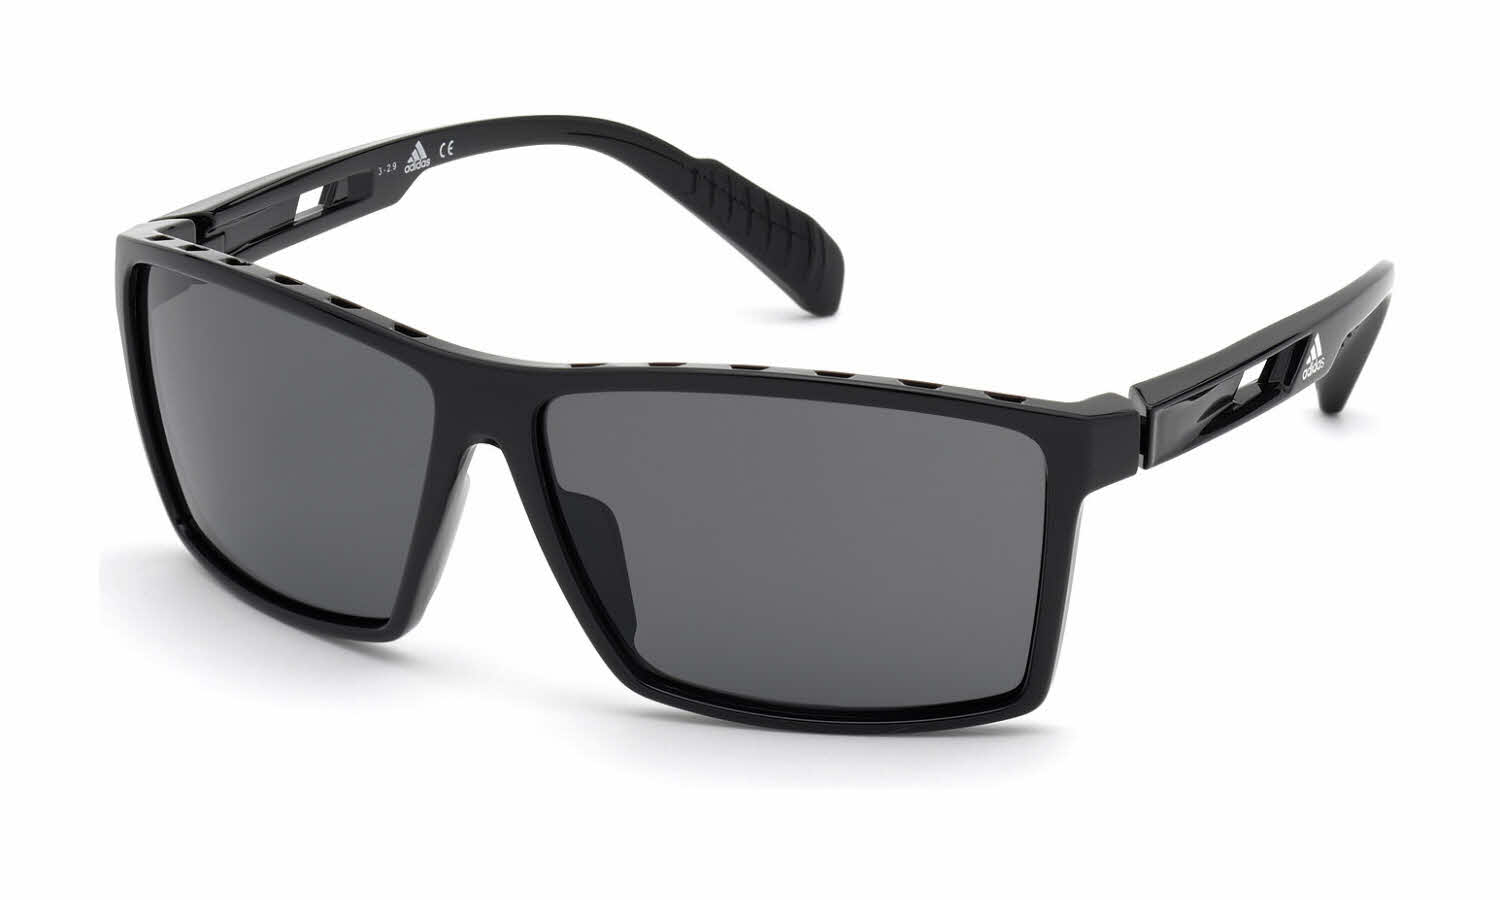 Adidas SP0010 Sunglasses